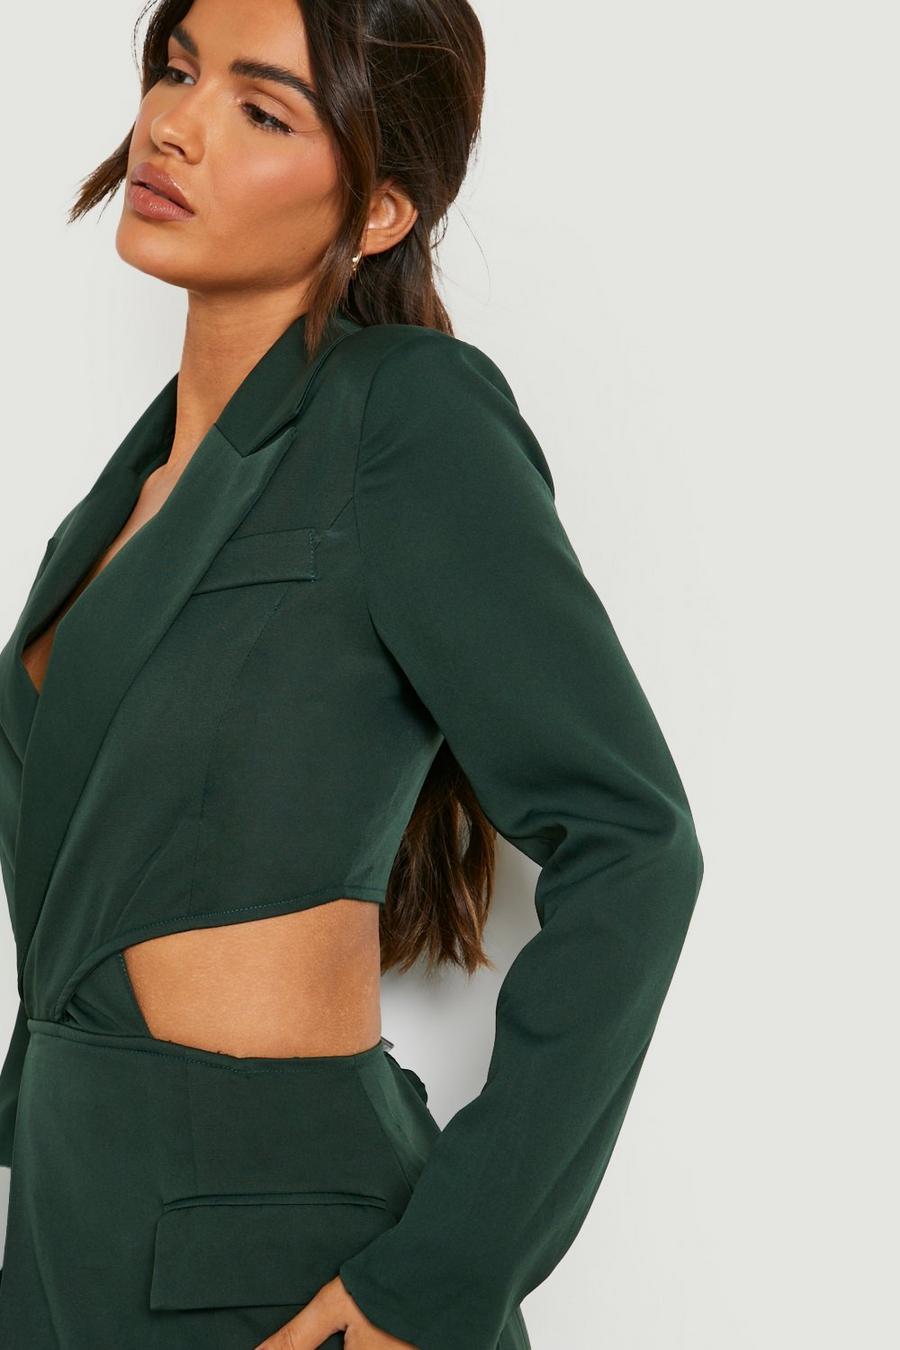 Emerald green Twist Cut Out Pocket Detail Blazer Dress